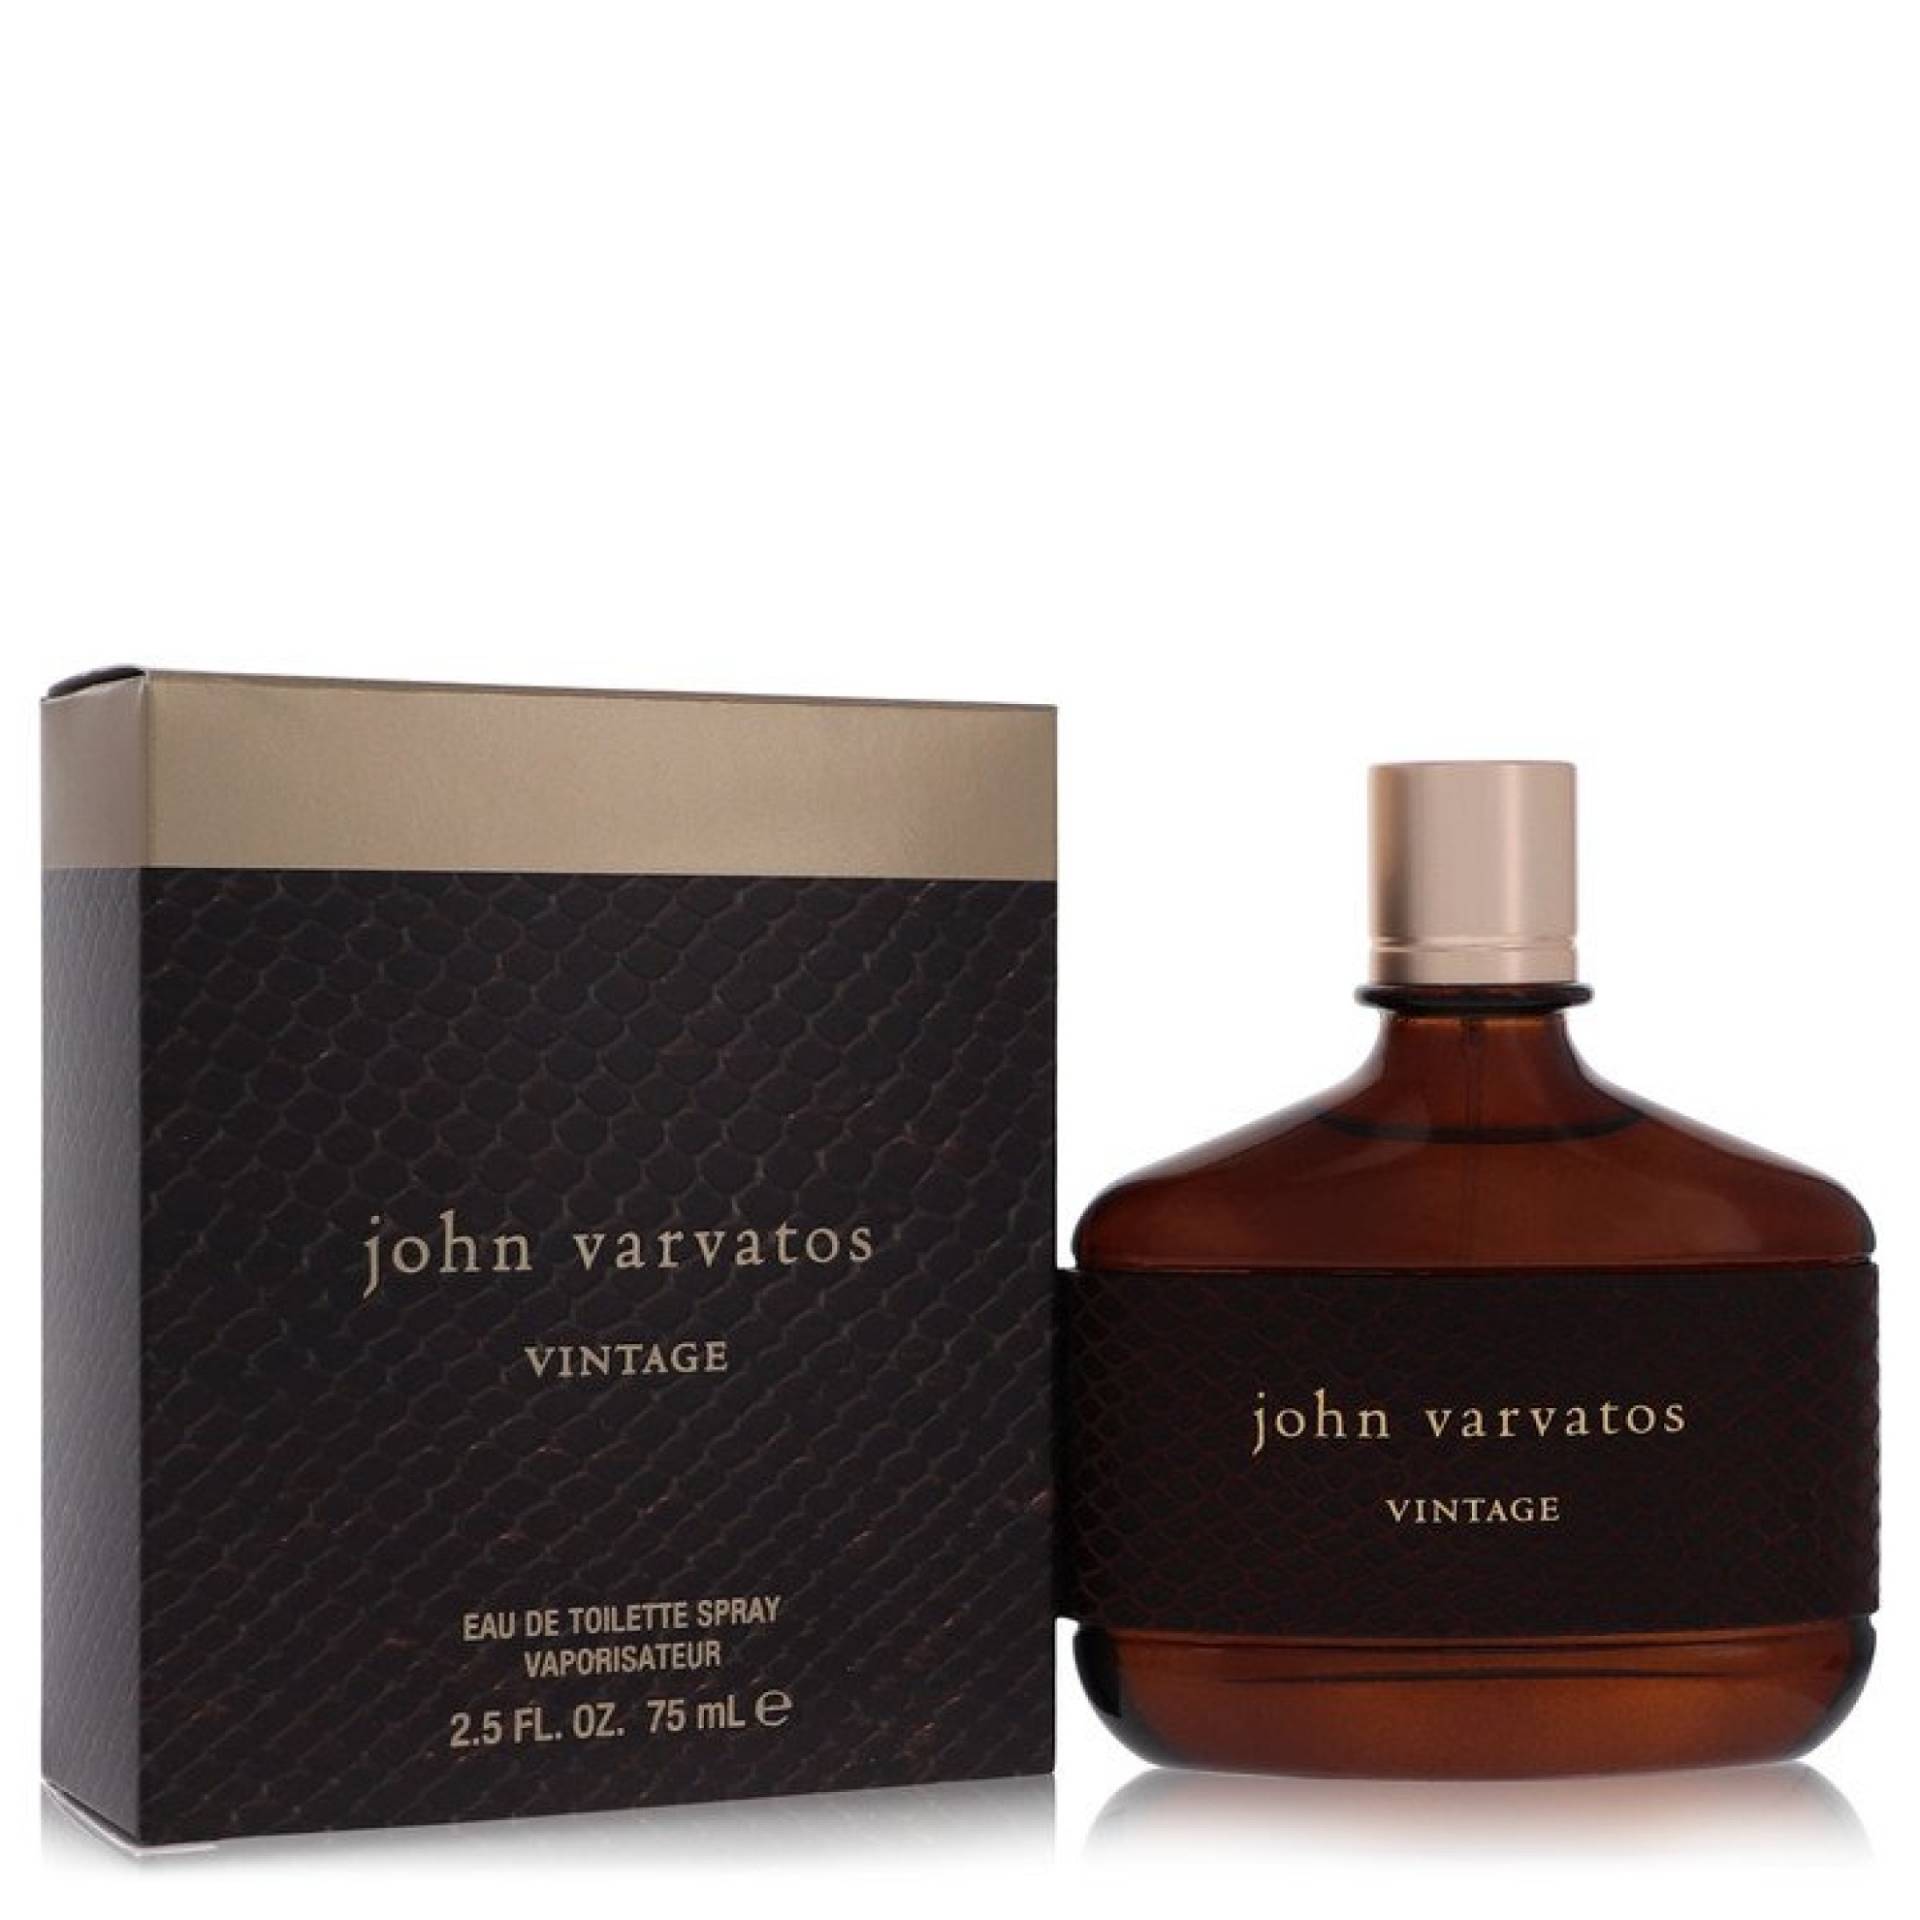 John Varvatos Vintage Eau De Toilette Spray 75 ml von John Varvatos